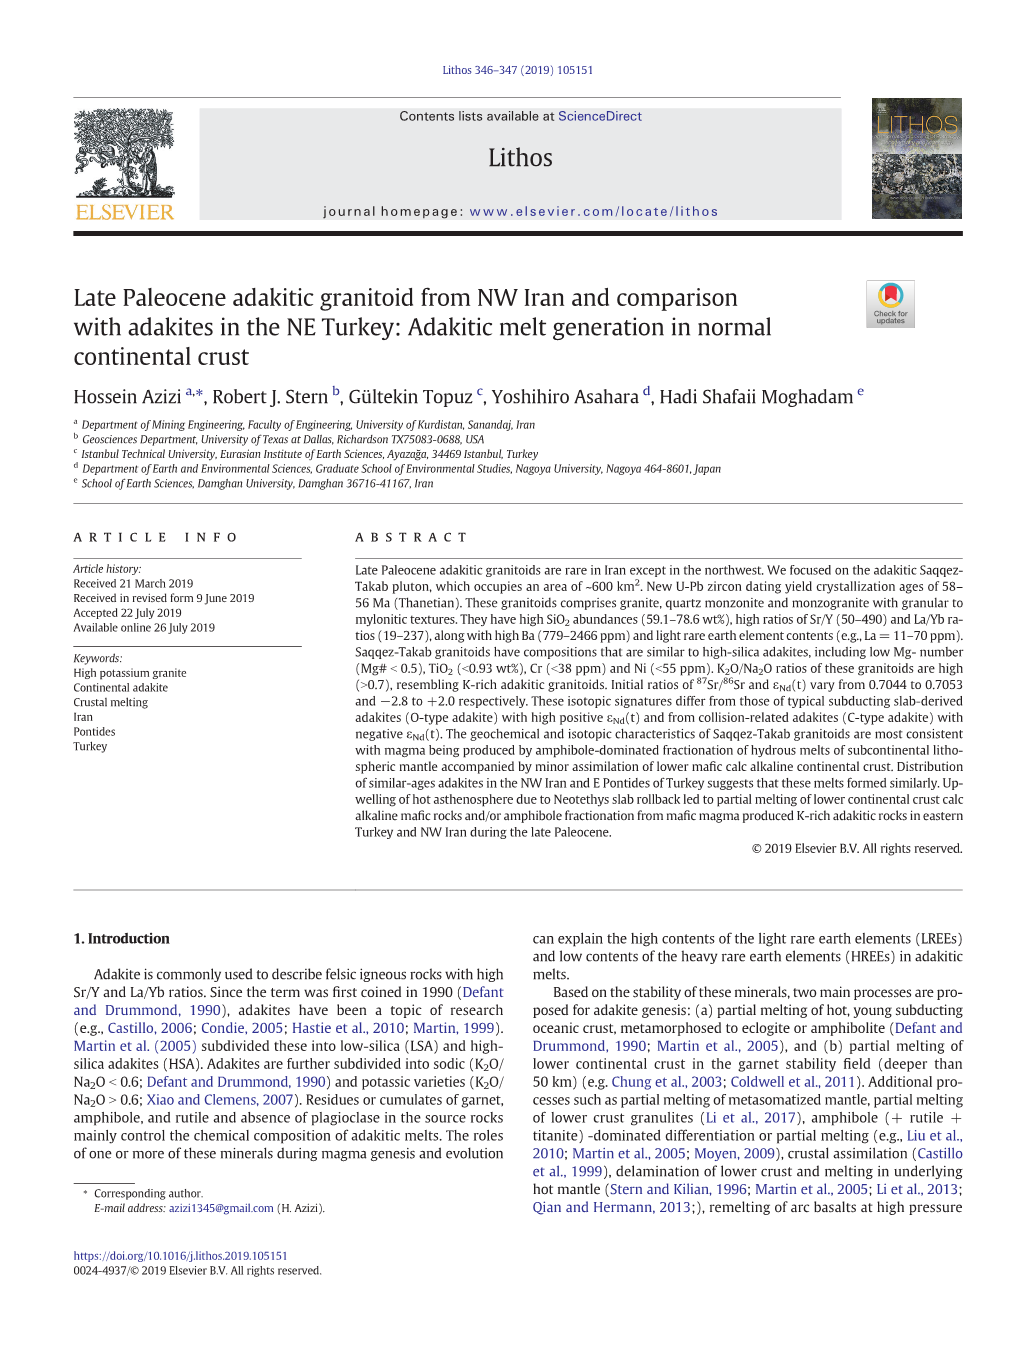 Late Paleocene Adakitic Granitoid from NW Iran and Comparison with Adakites in the NE Turkey: Adakitic Melt Generation in Normal Continental Crust